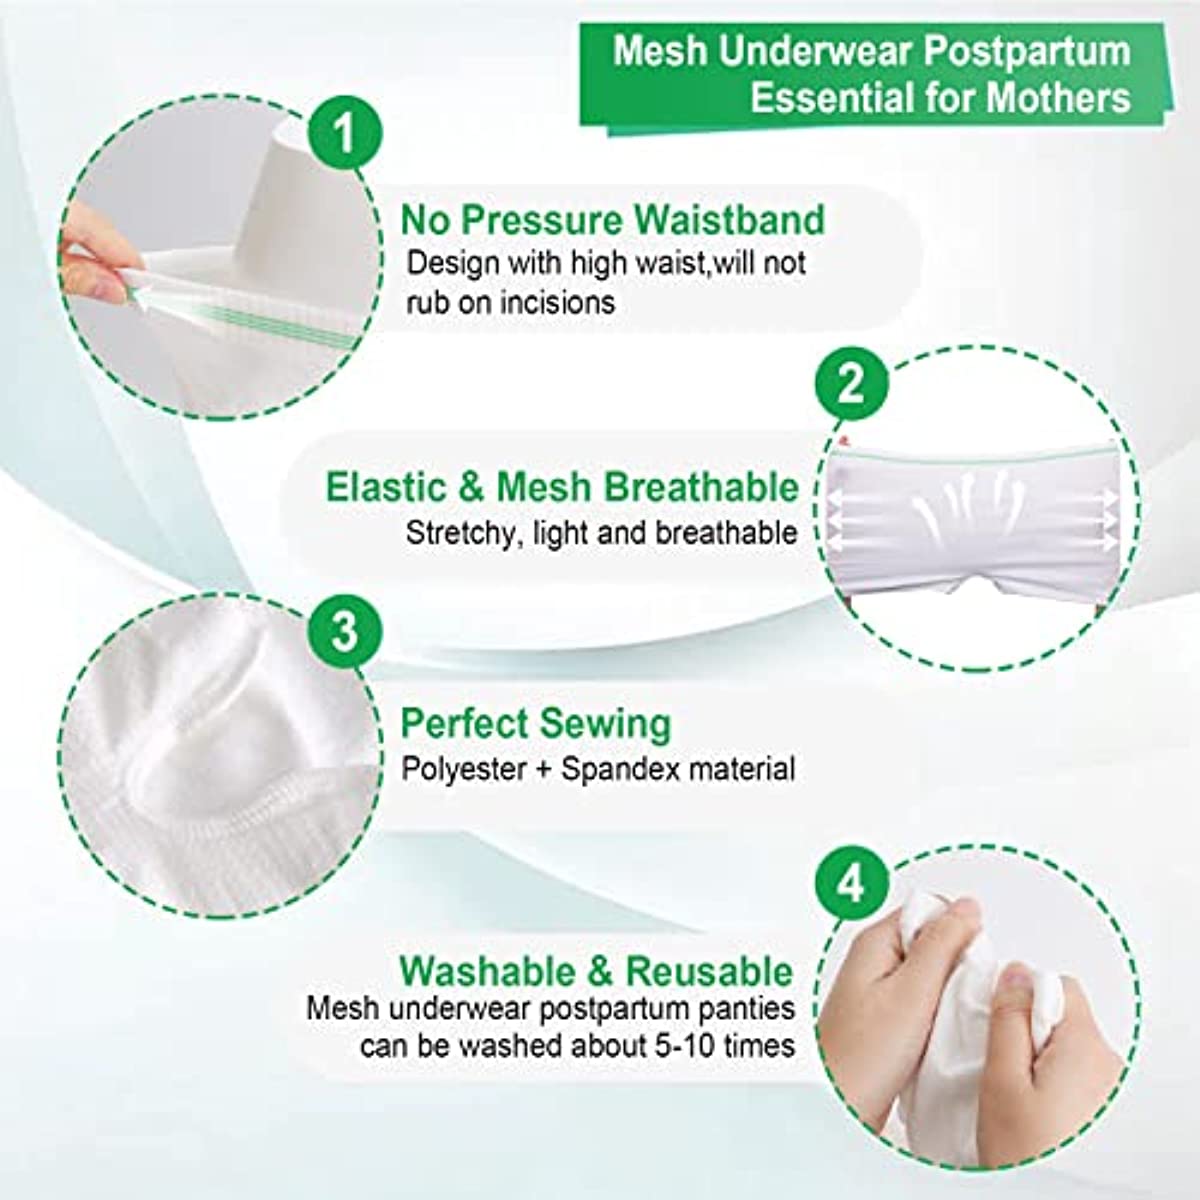 Reusable & Washable Mesh Postpartum Underwear Panties - China